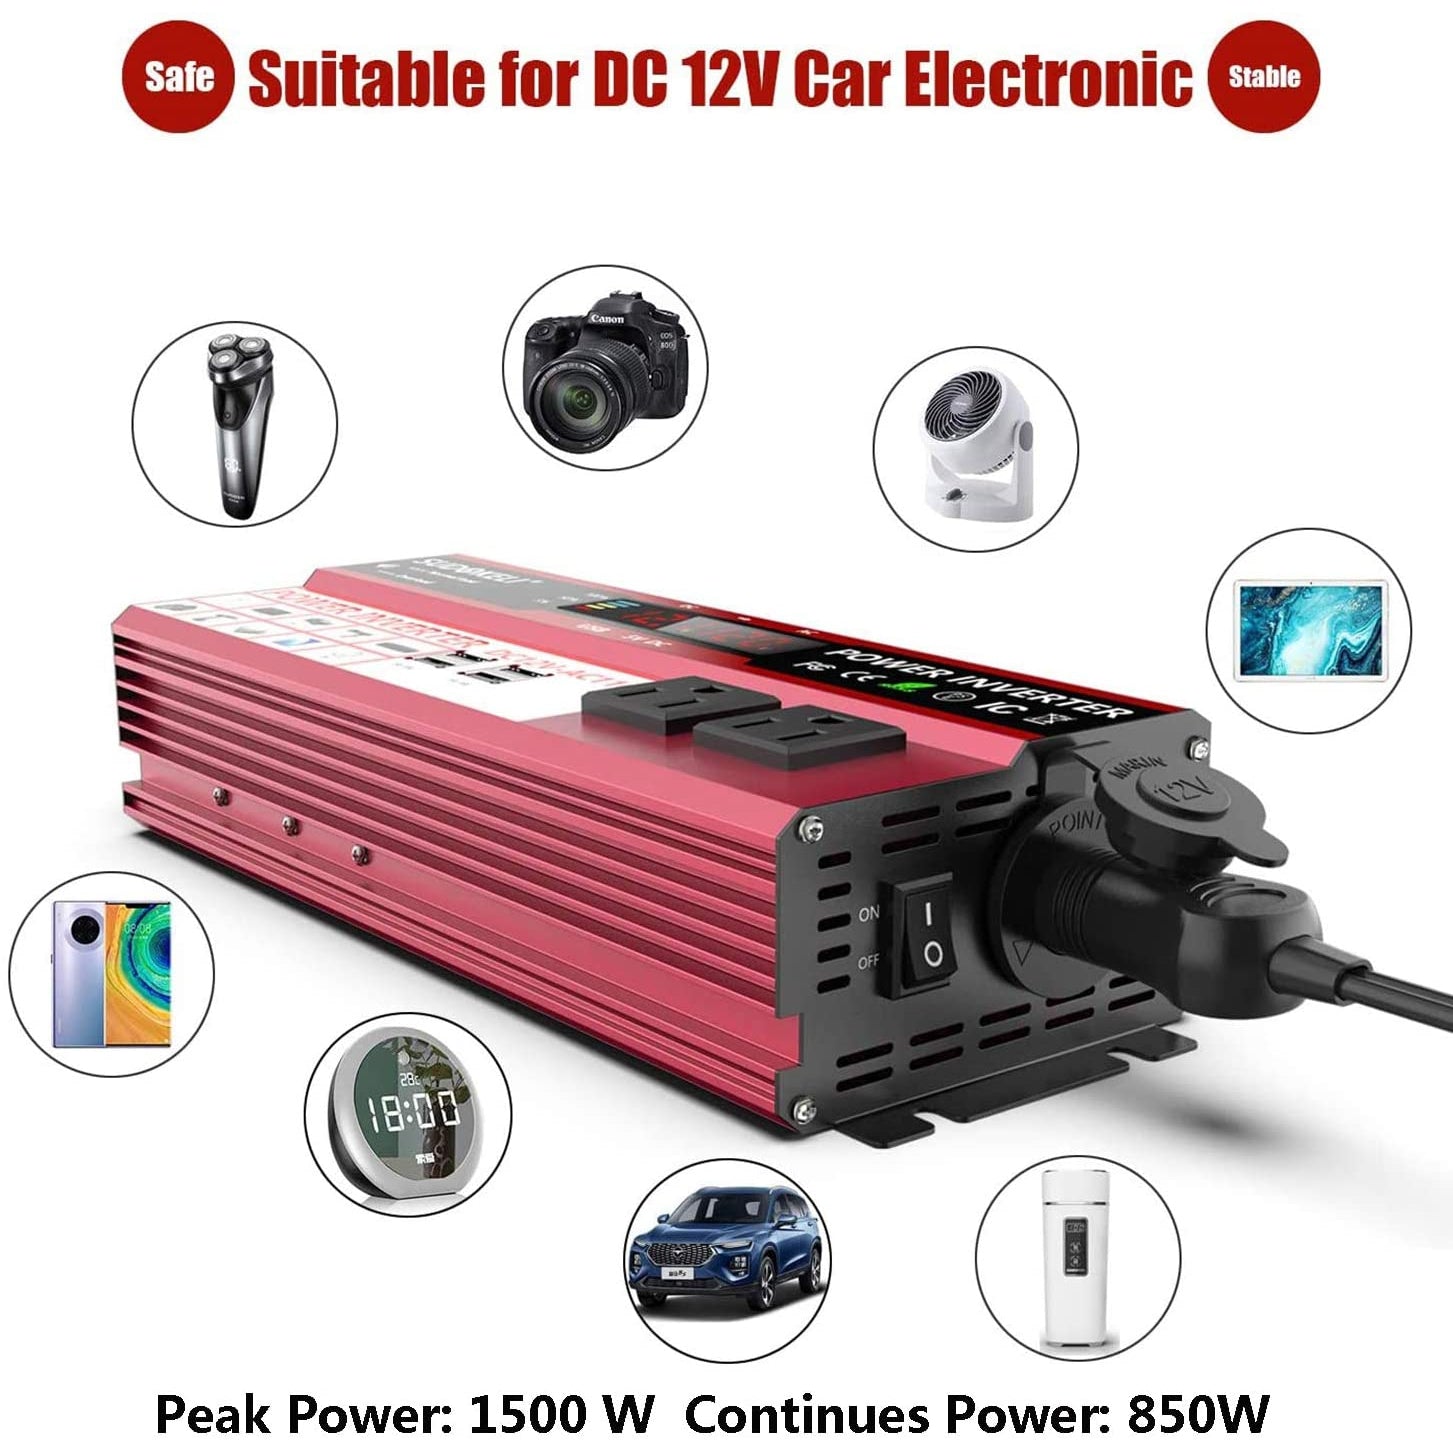 Sudokeji 1500W Power Inverter DC 12V to 240V AC Car Converter 12V Inverter with LCD Display